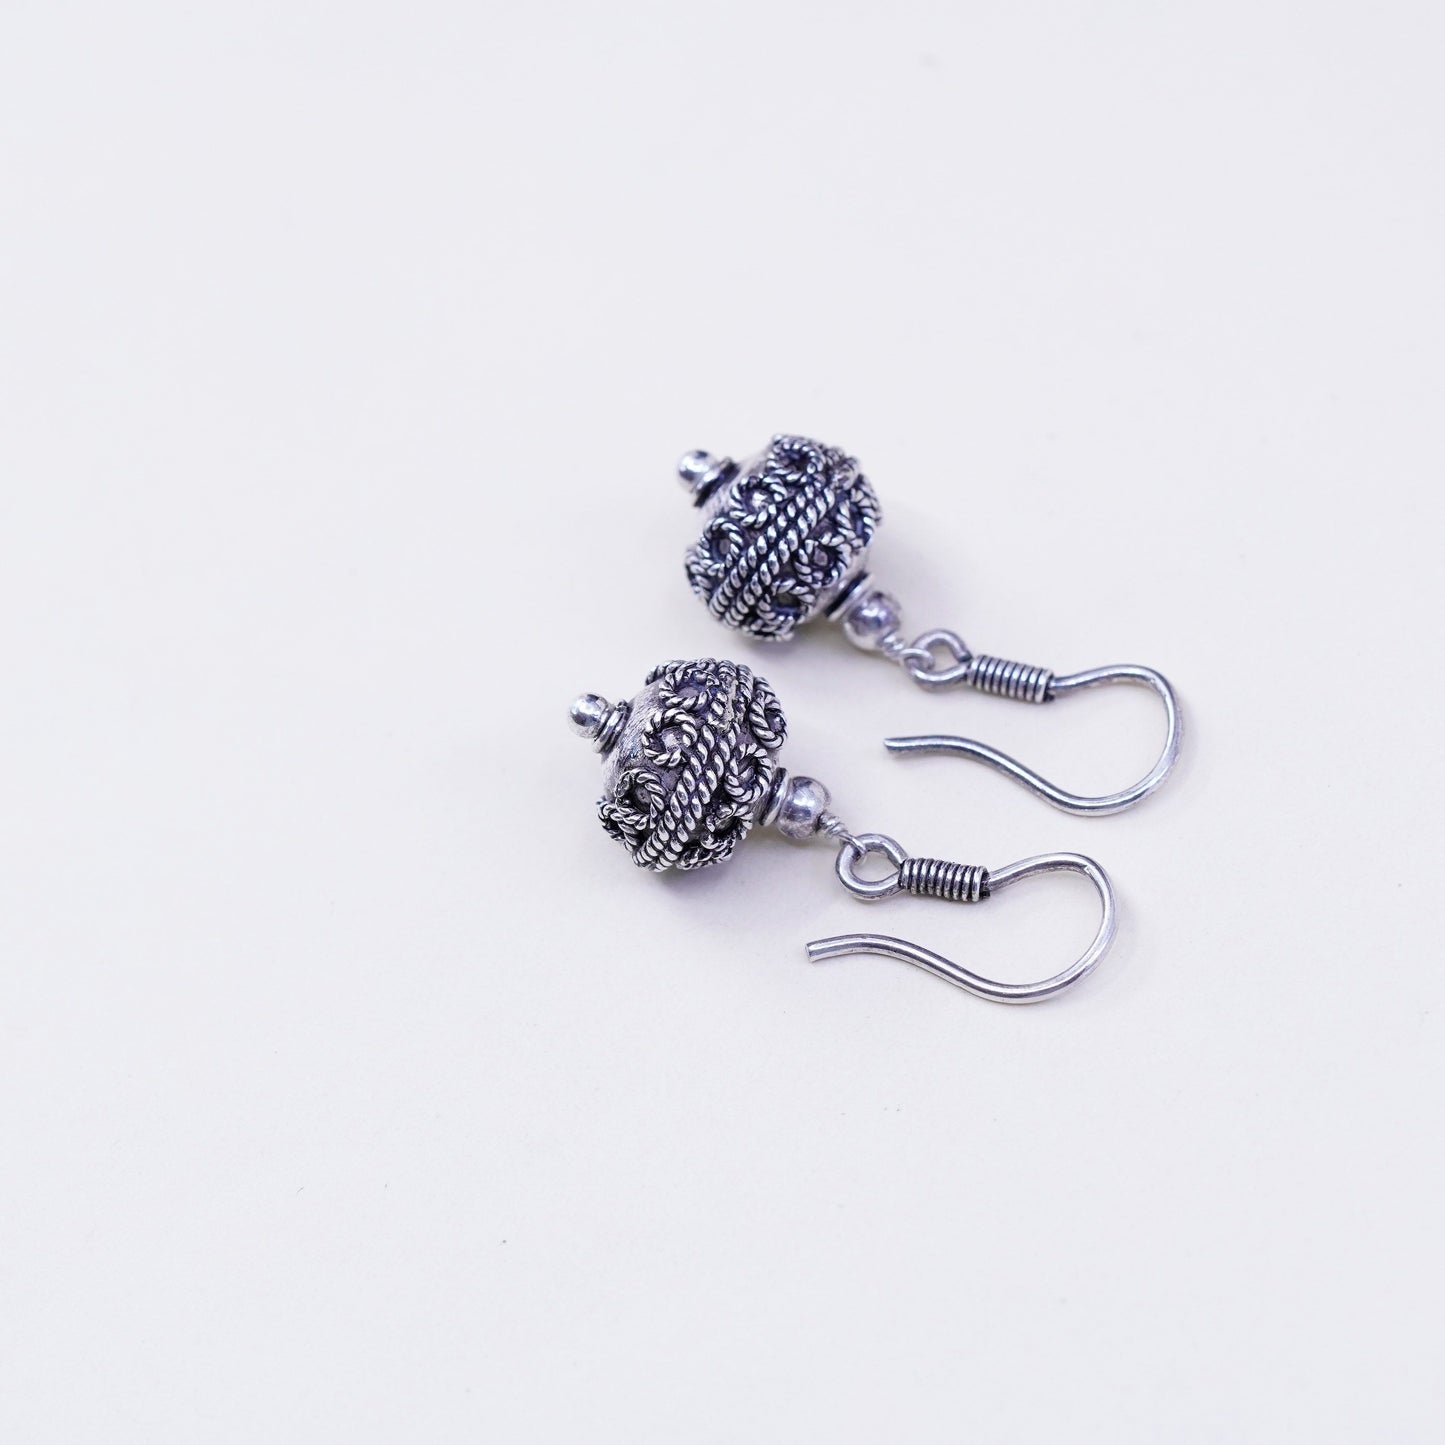 Vintage Sterling silver handmade Bali earrings, 925 swirl patterned bead